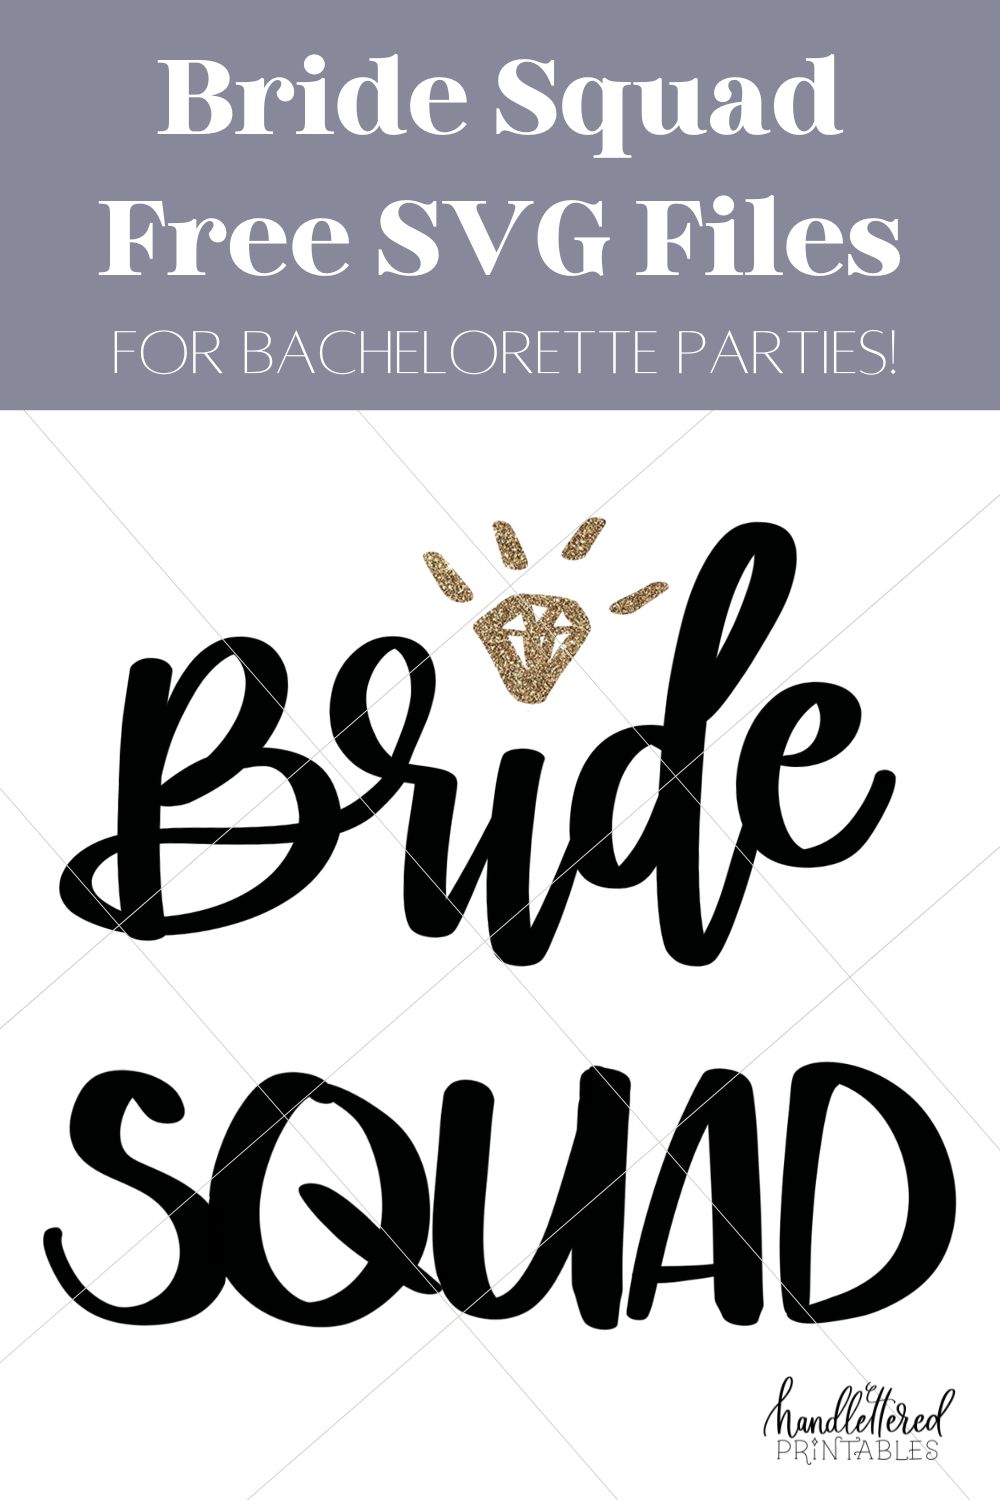 Bride Squad free SVG files for cricut crafts